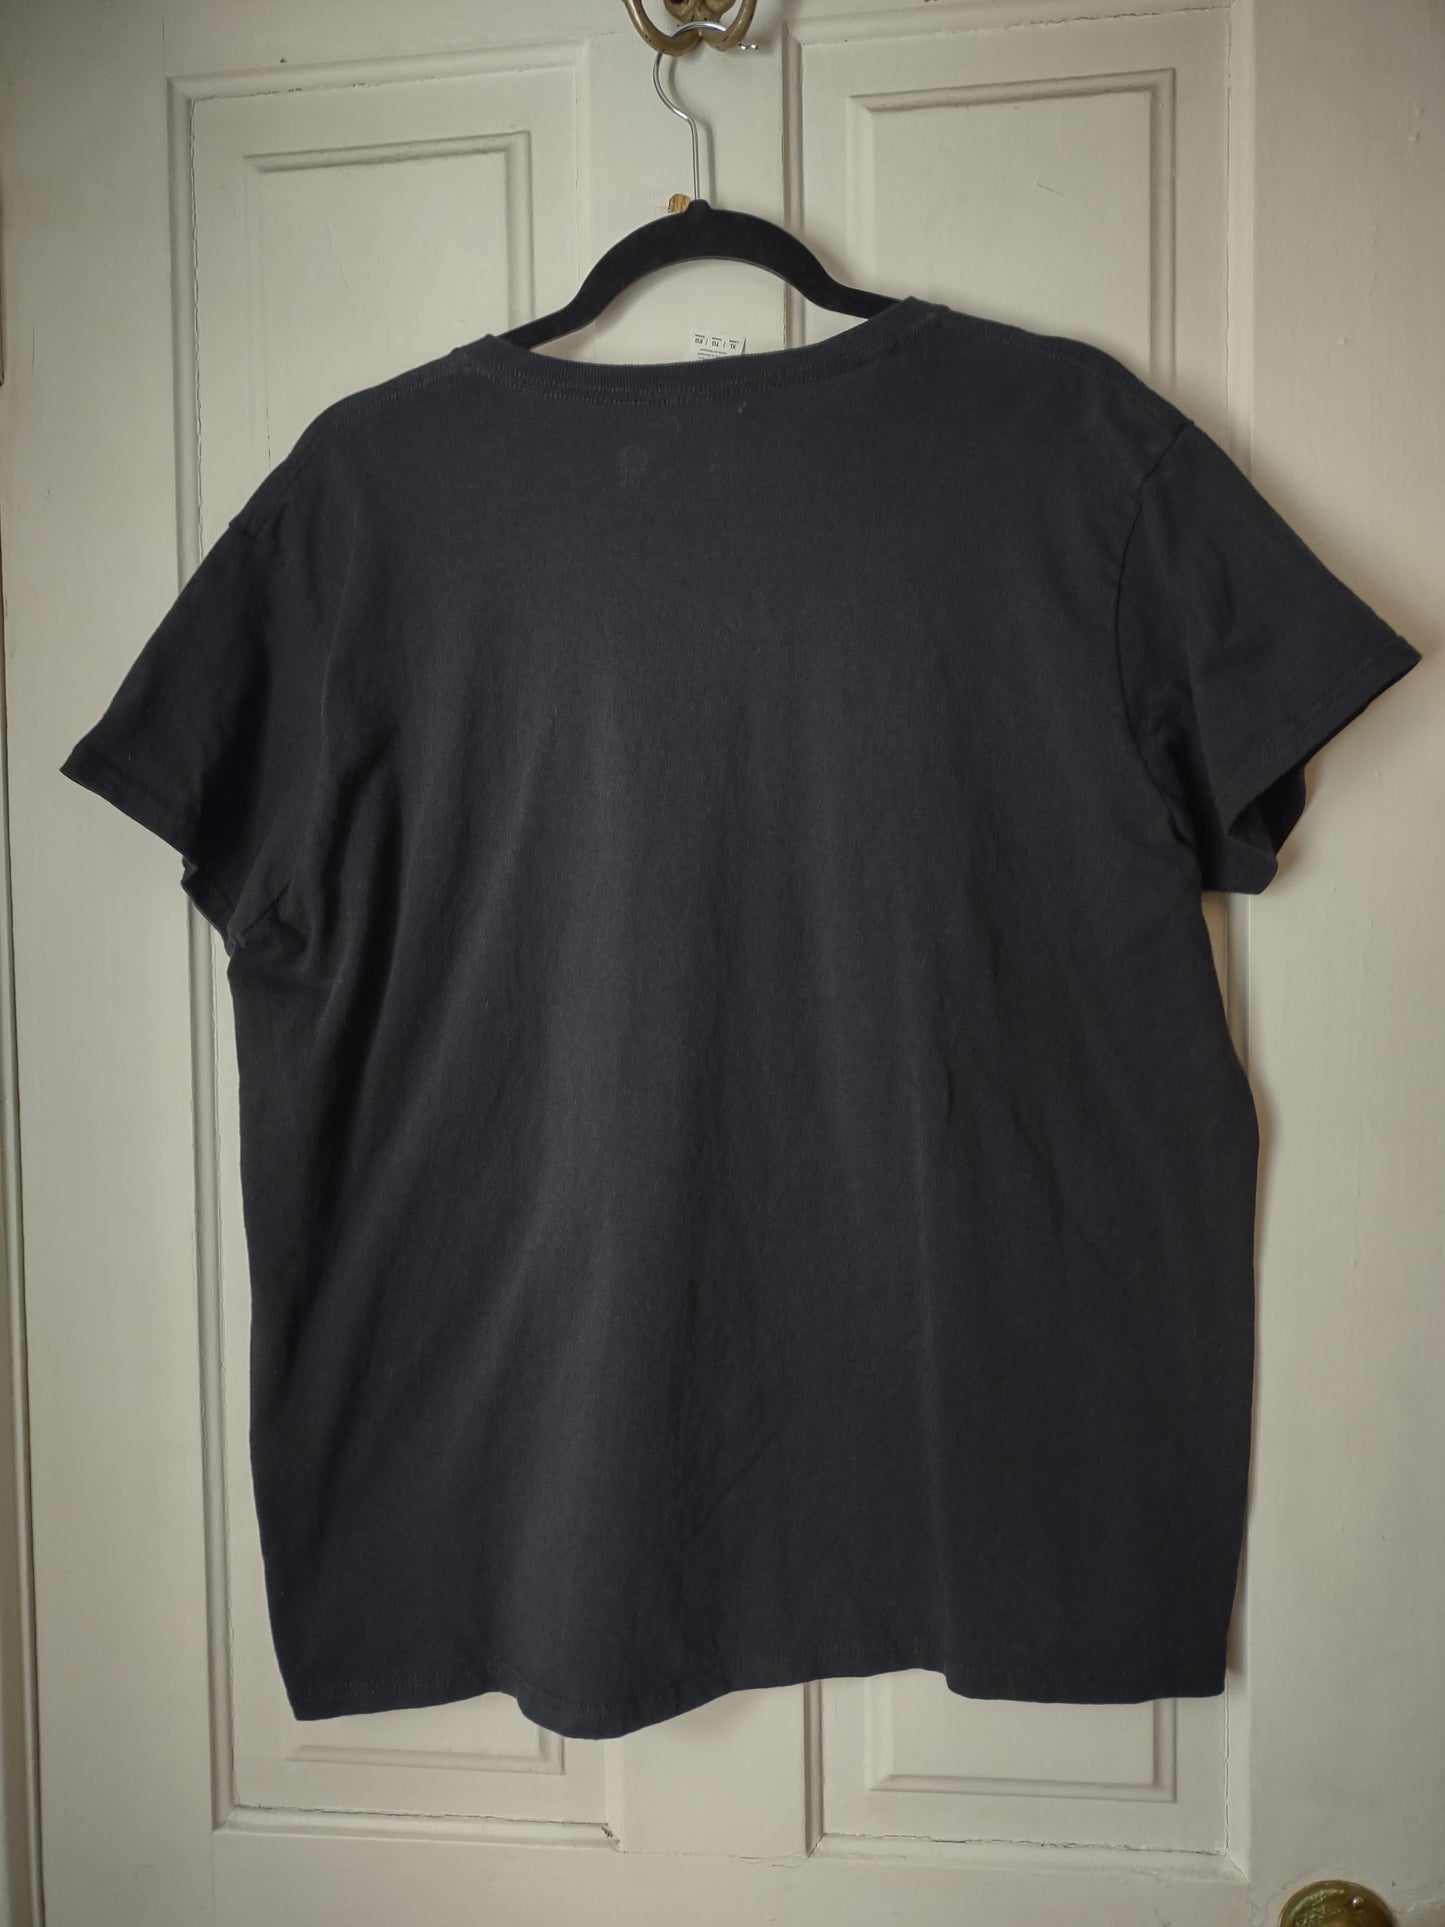 Black Co-Resist Shirt XL